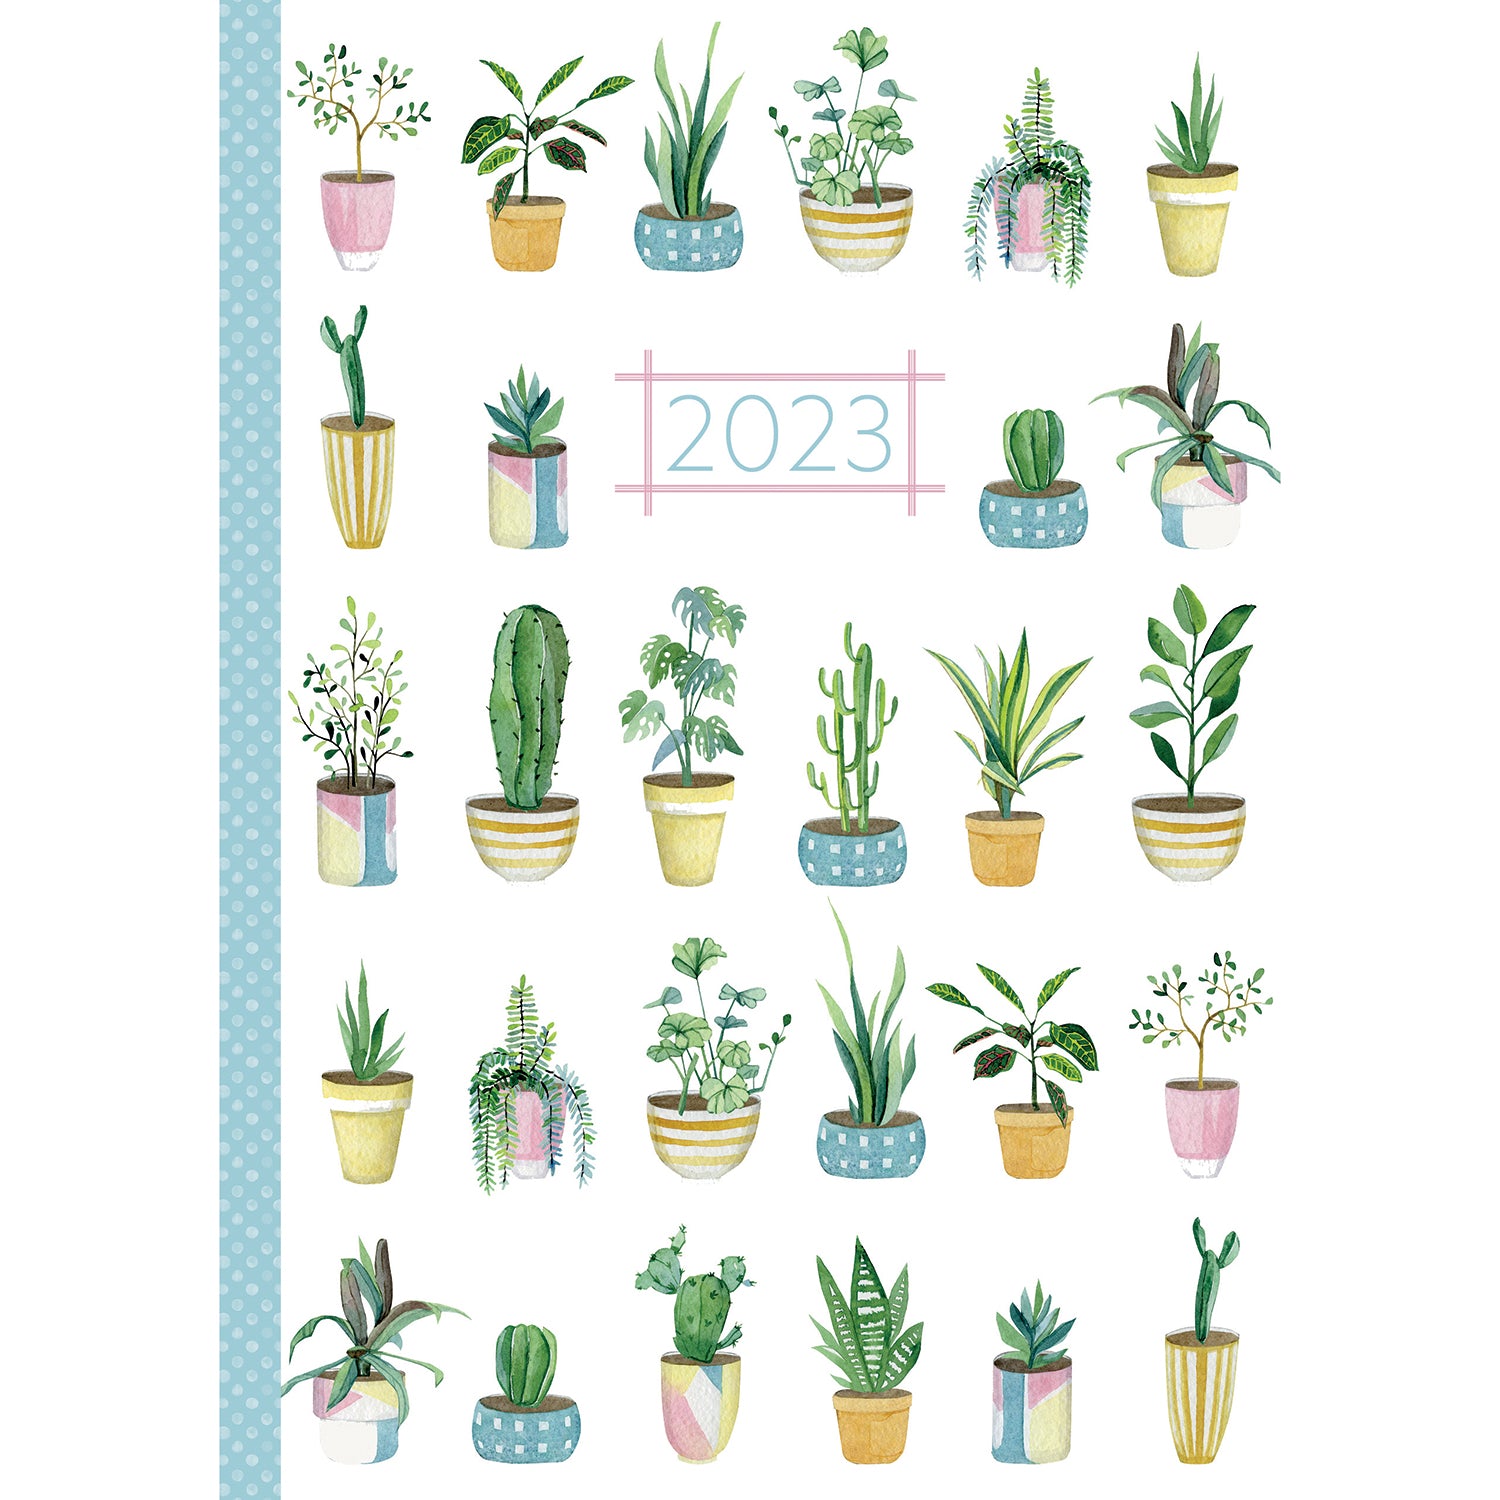 Urban Garden - 2023 A5 Padded Cover Diary Premium Planner Book New Year Gift - Zmart Australia